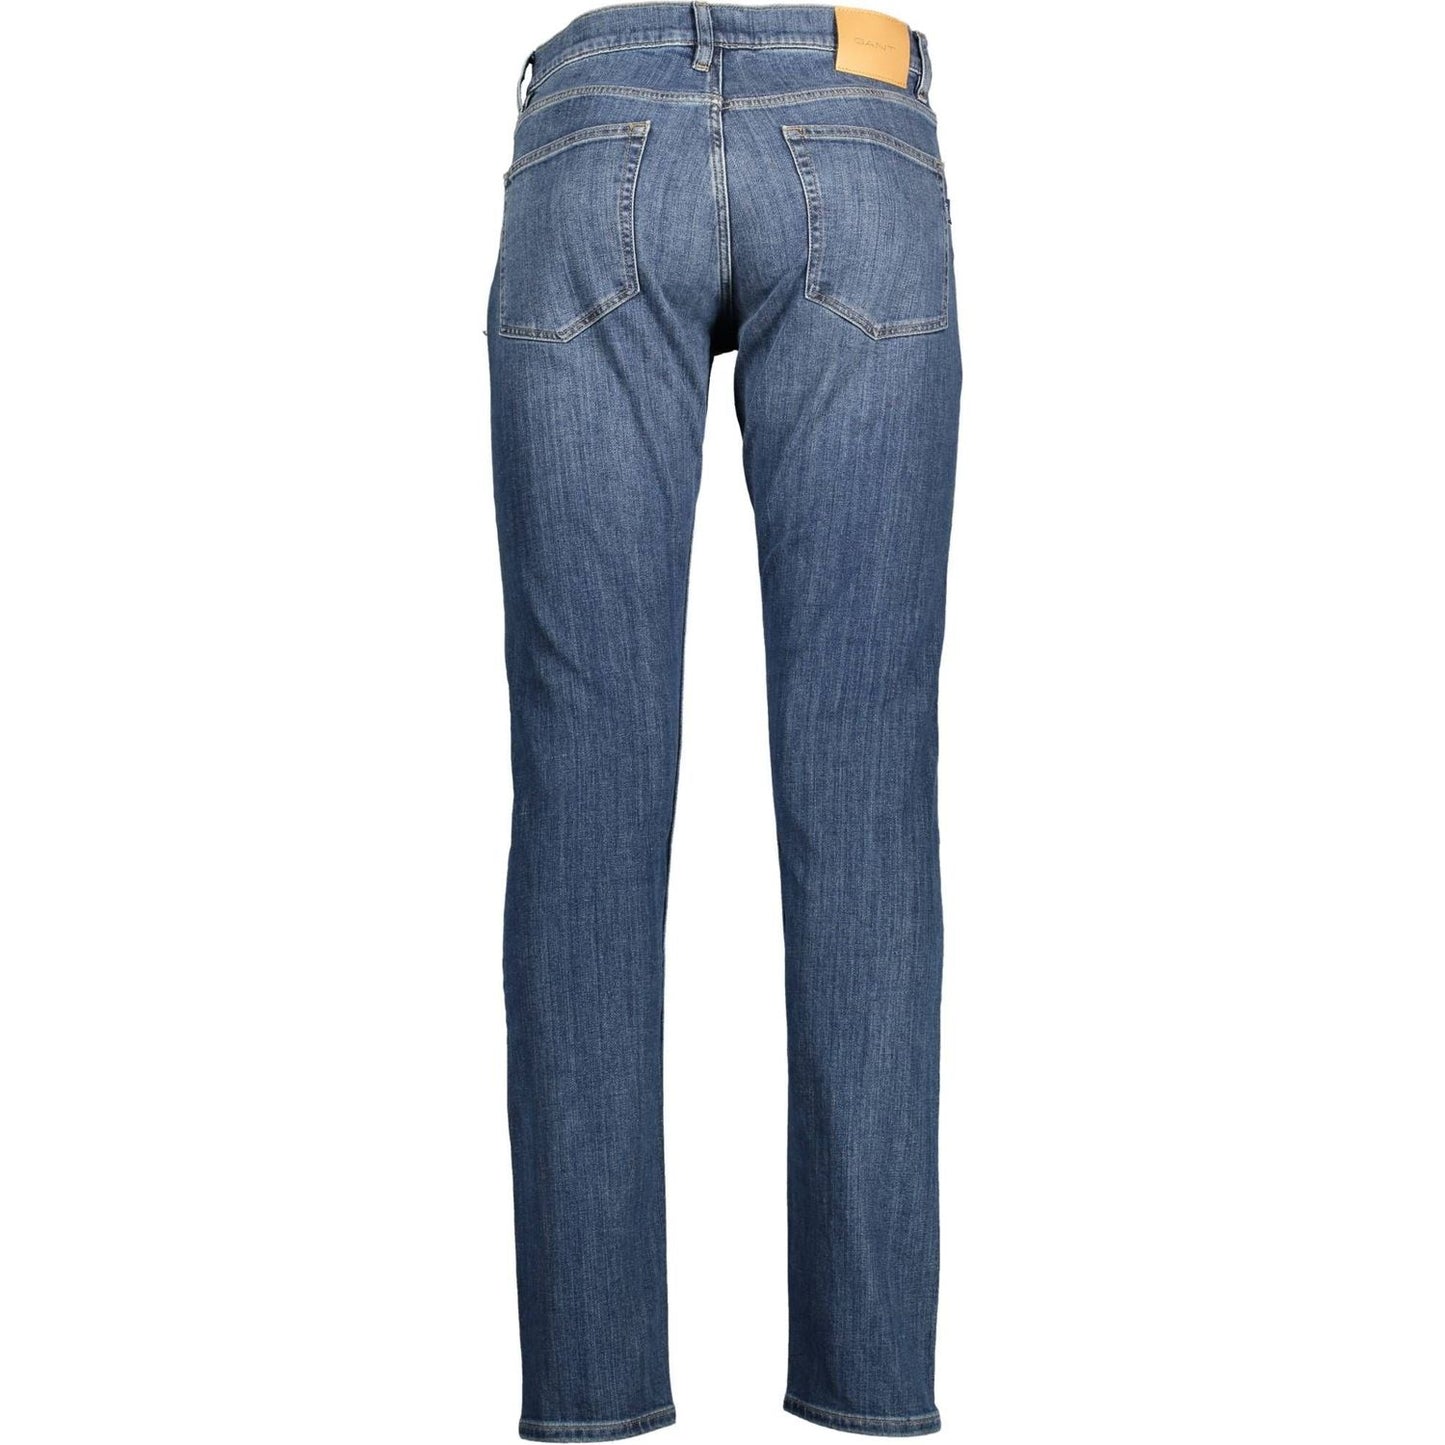 Gant Chic Slim Fit Faded Blue Jeans chic-slim-fit-faded-blue-jeans-1